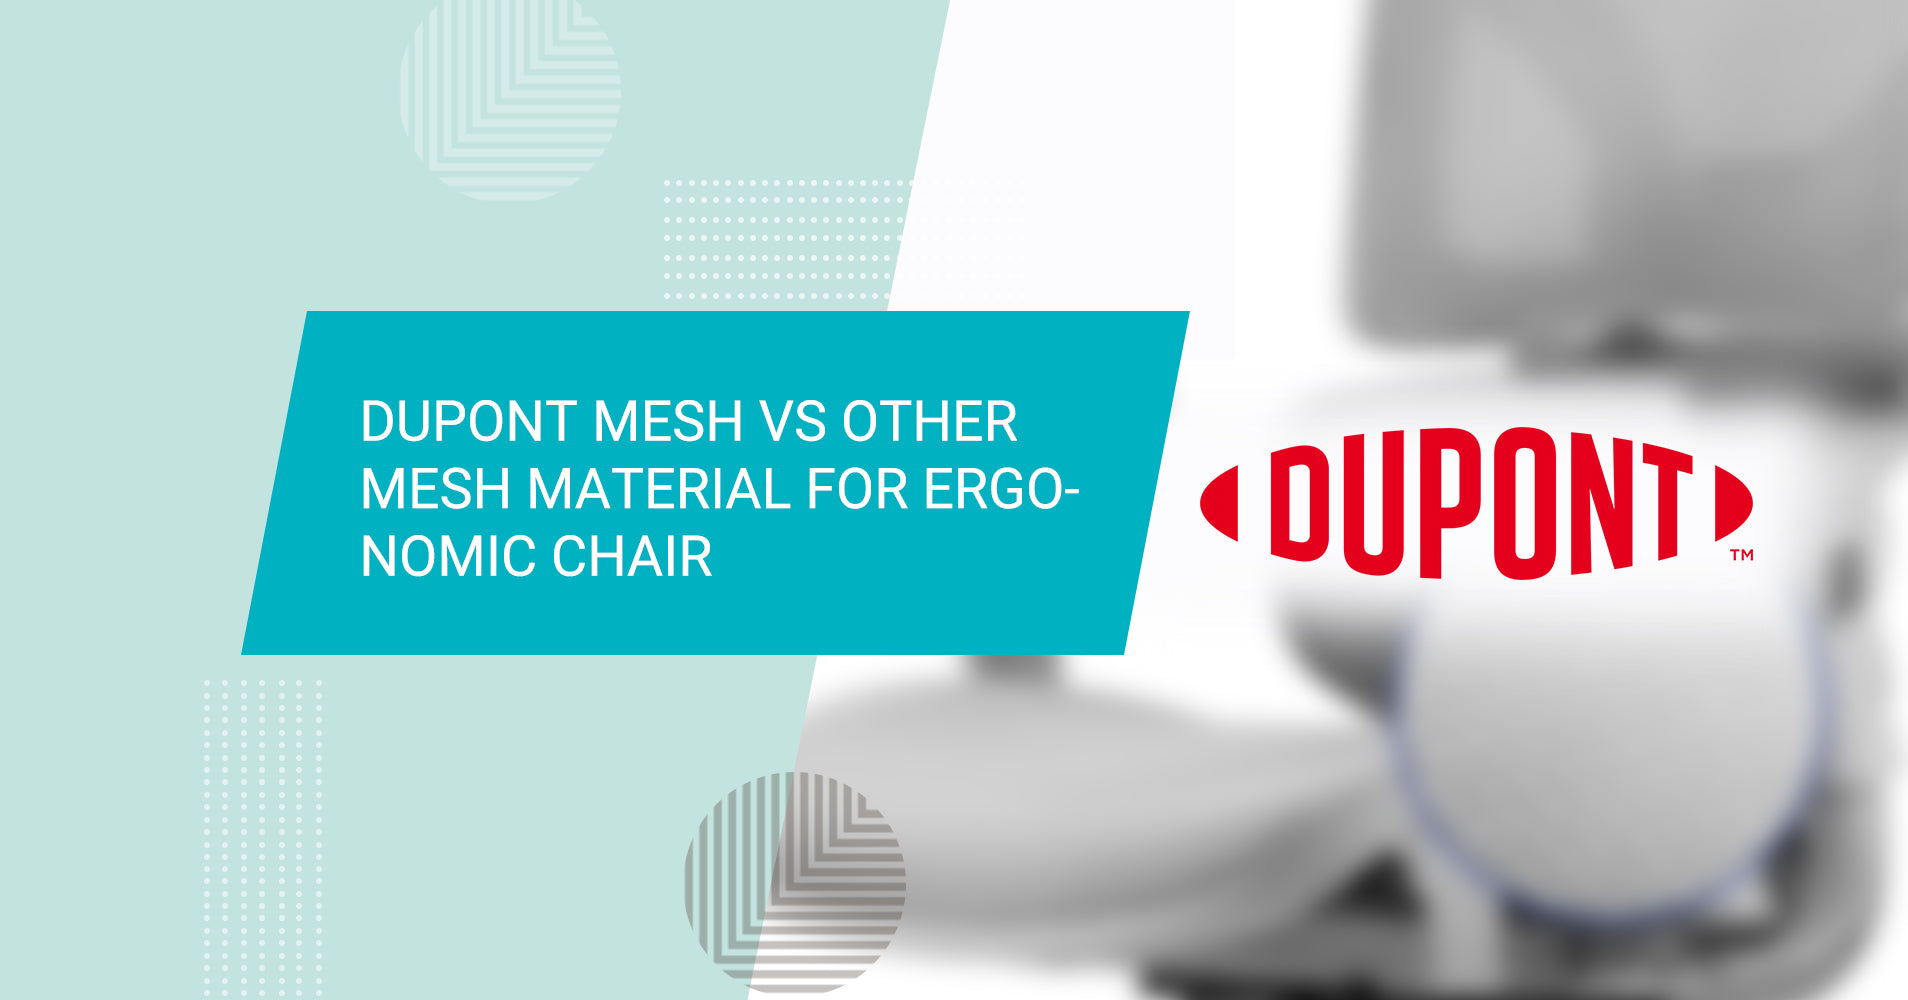 Dupont mesh vs other mesh material for Ergonomic Chair